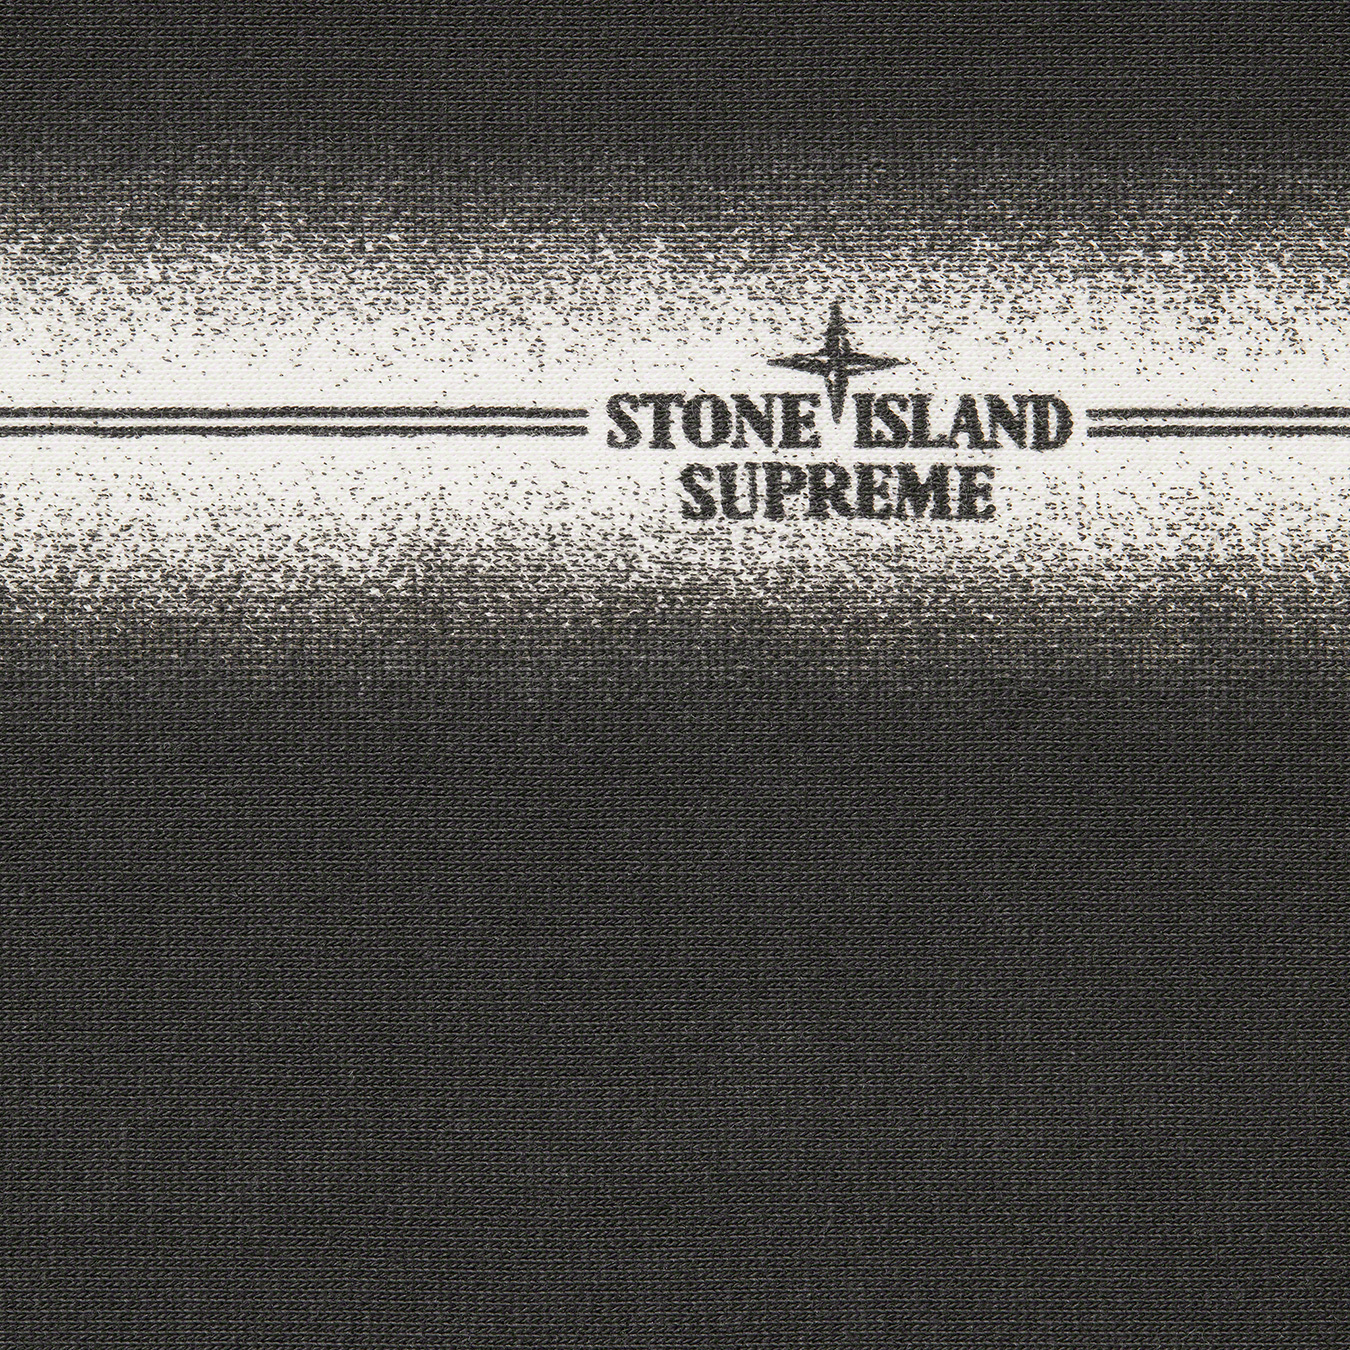 Stone Island / Supreme SS_'022